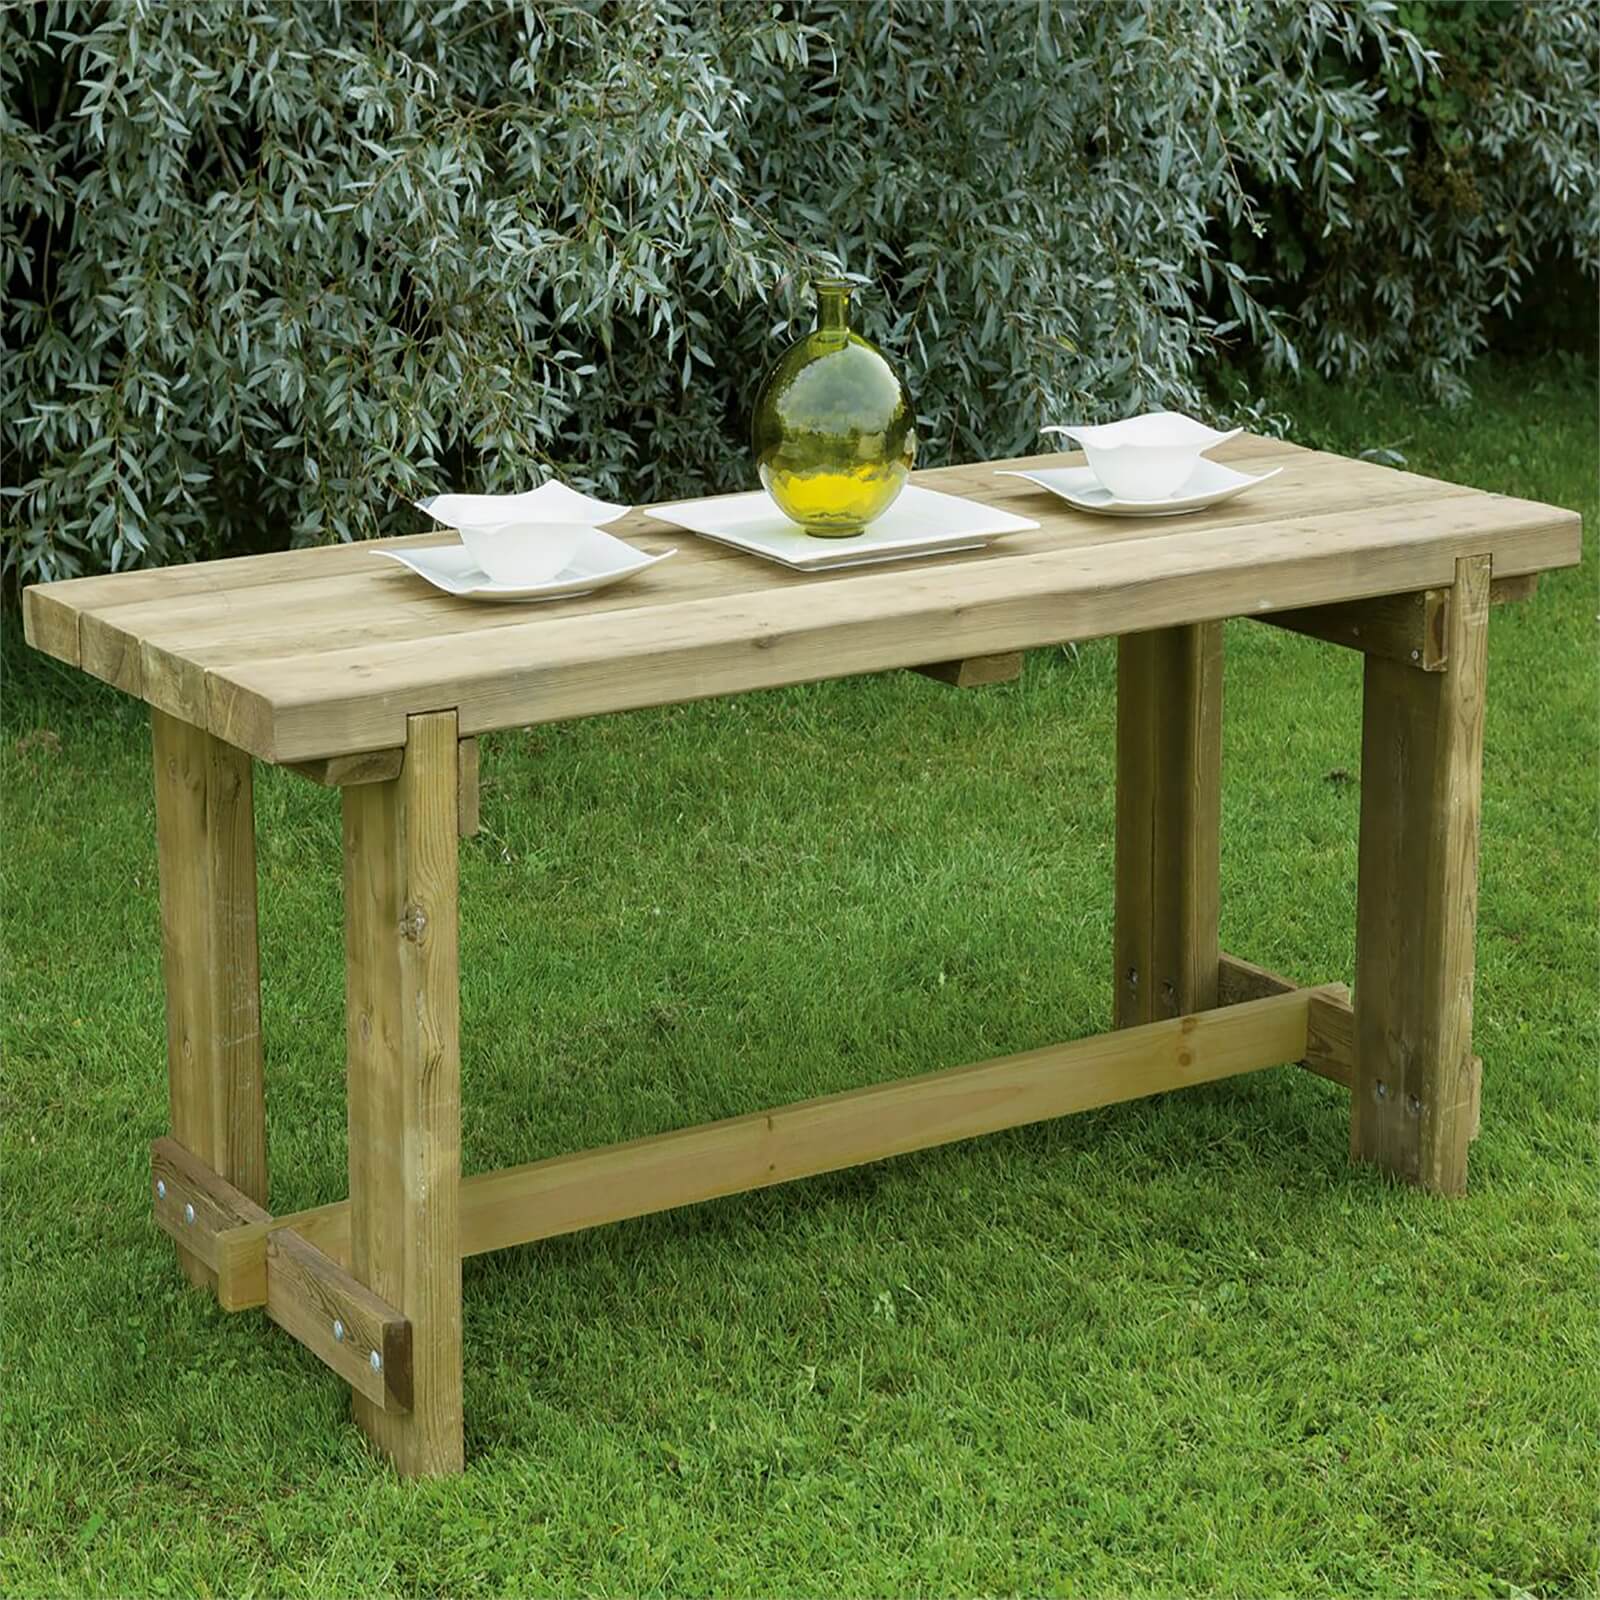 Photo of Forest Garden Refectory Wooden Garden Table - 1.8m